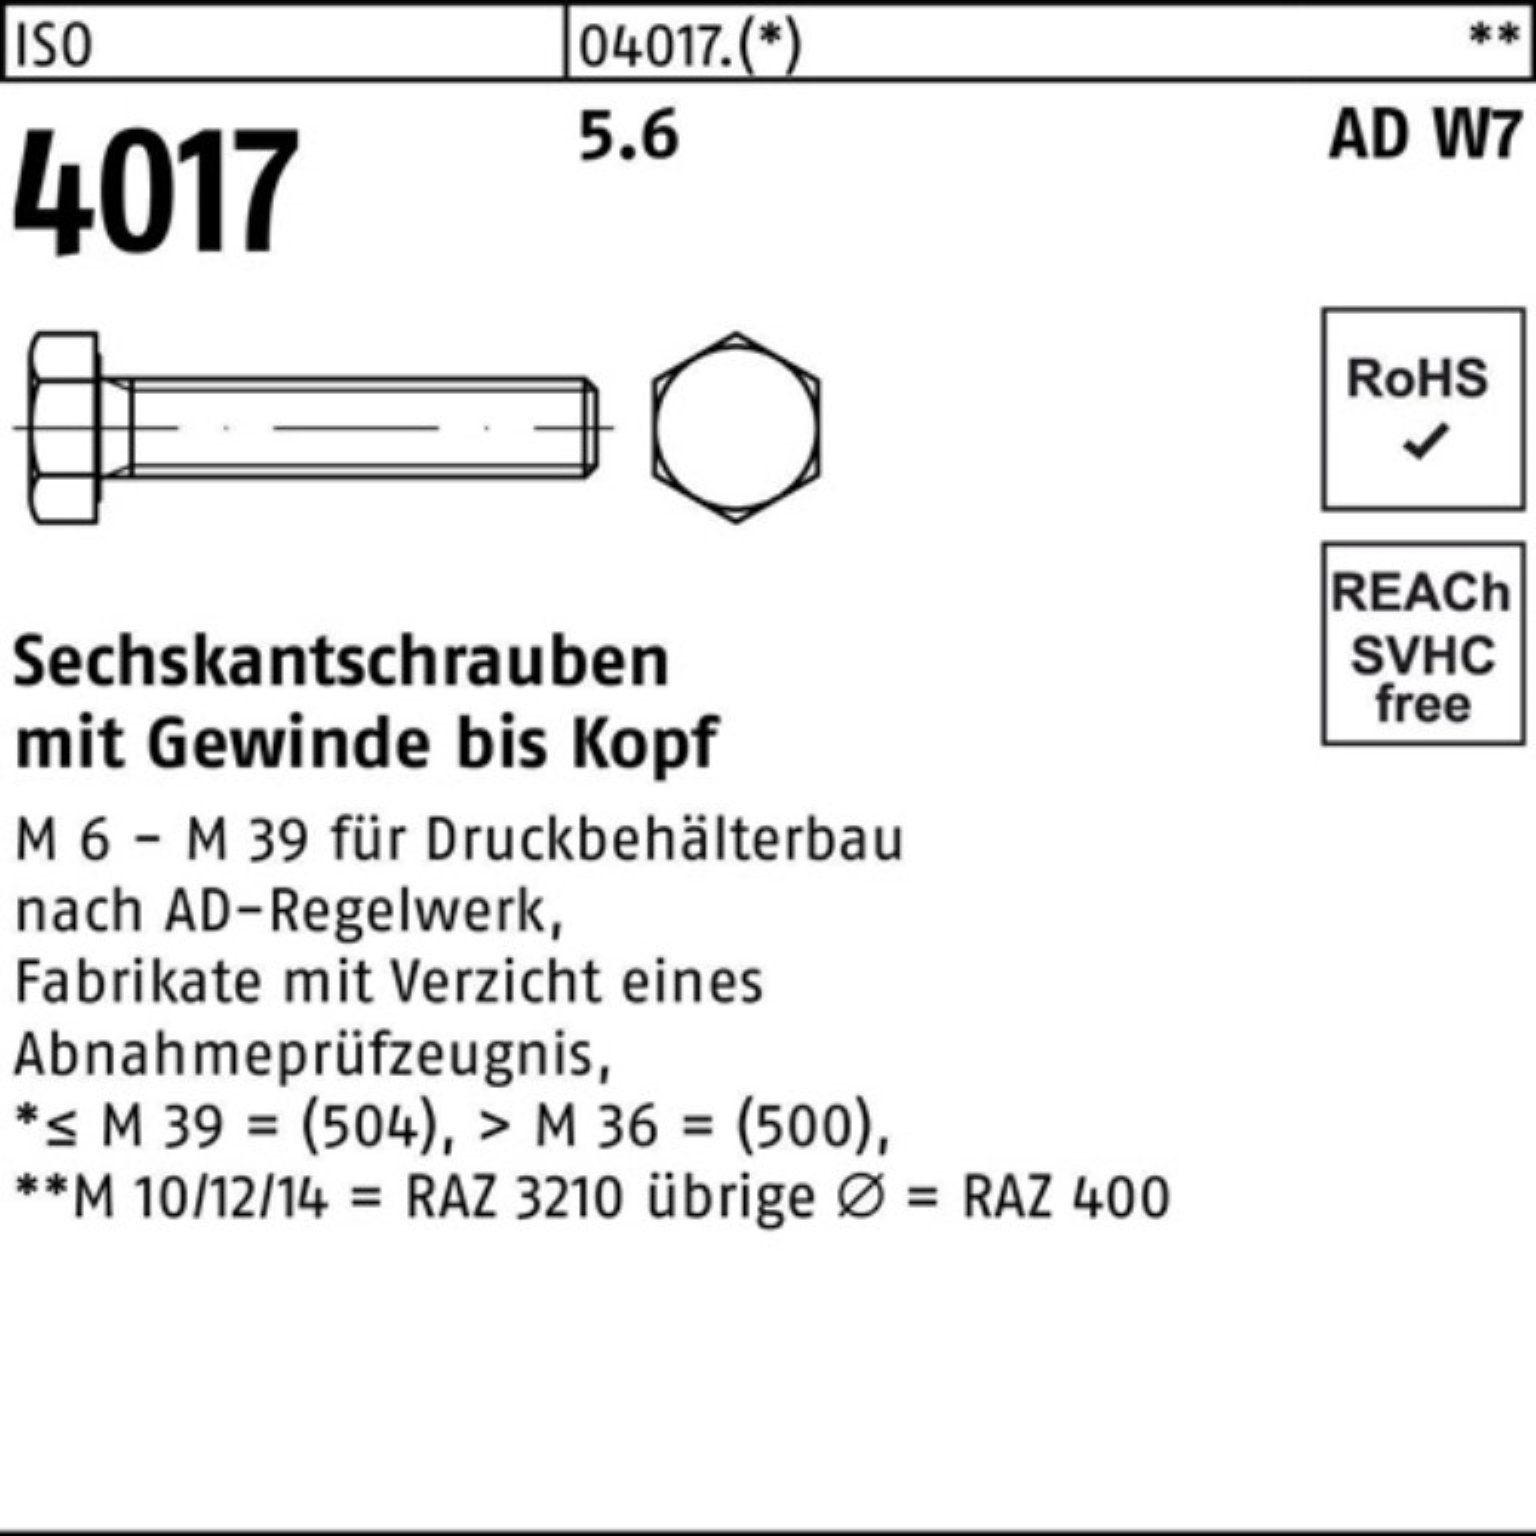 Bufab Sechskantschraube 200er Pack 5.6 W7 ISO VG 200 4017 Stück M8x I Sechskantschraube 16 AD